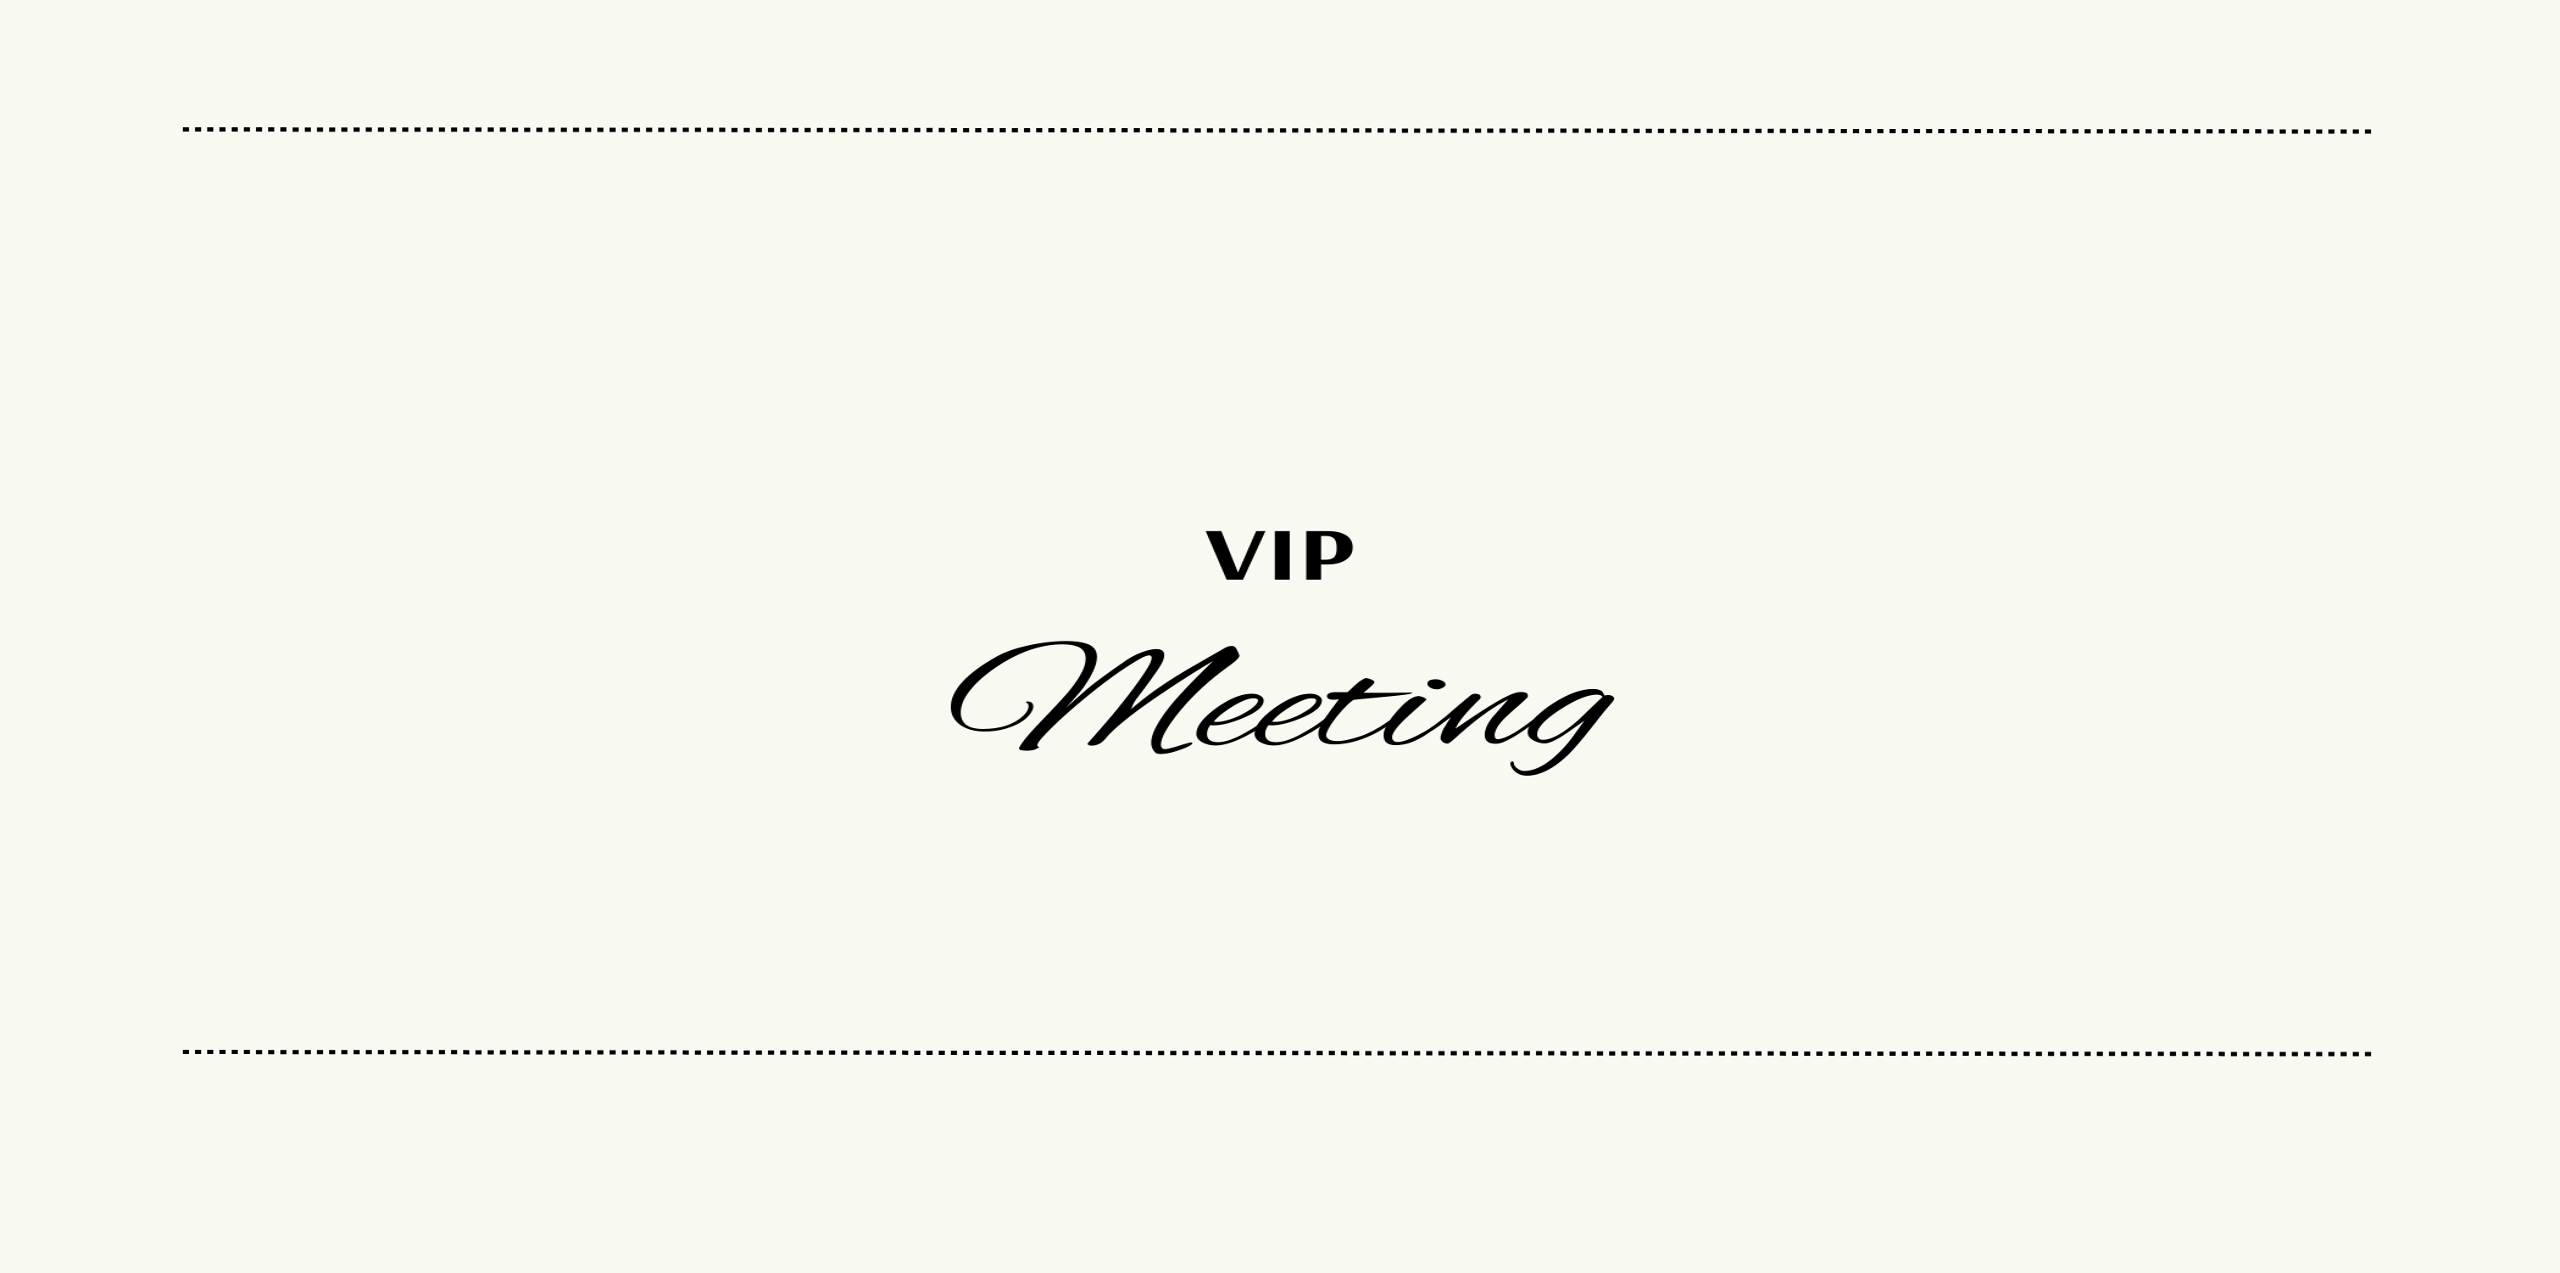 Zaproszenie VIP Meeting Kappa Data (5)